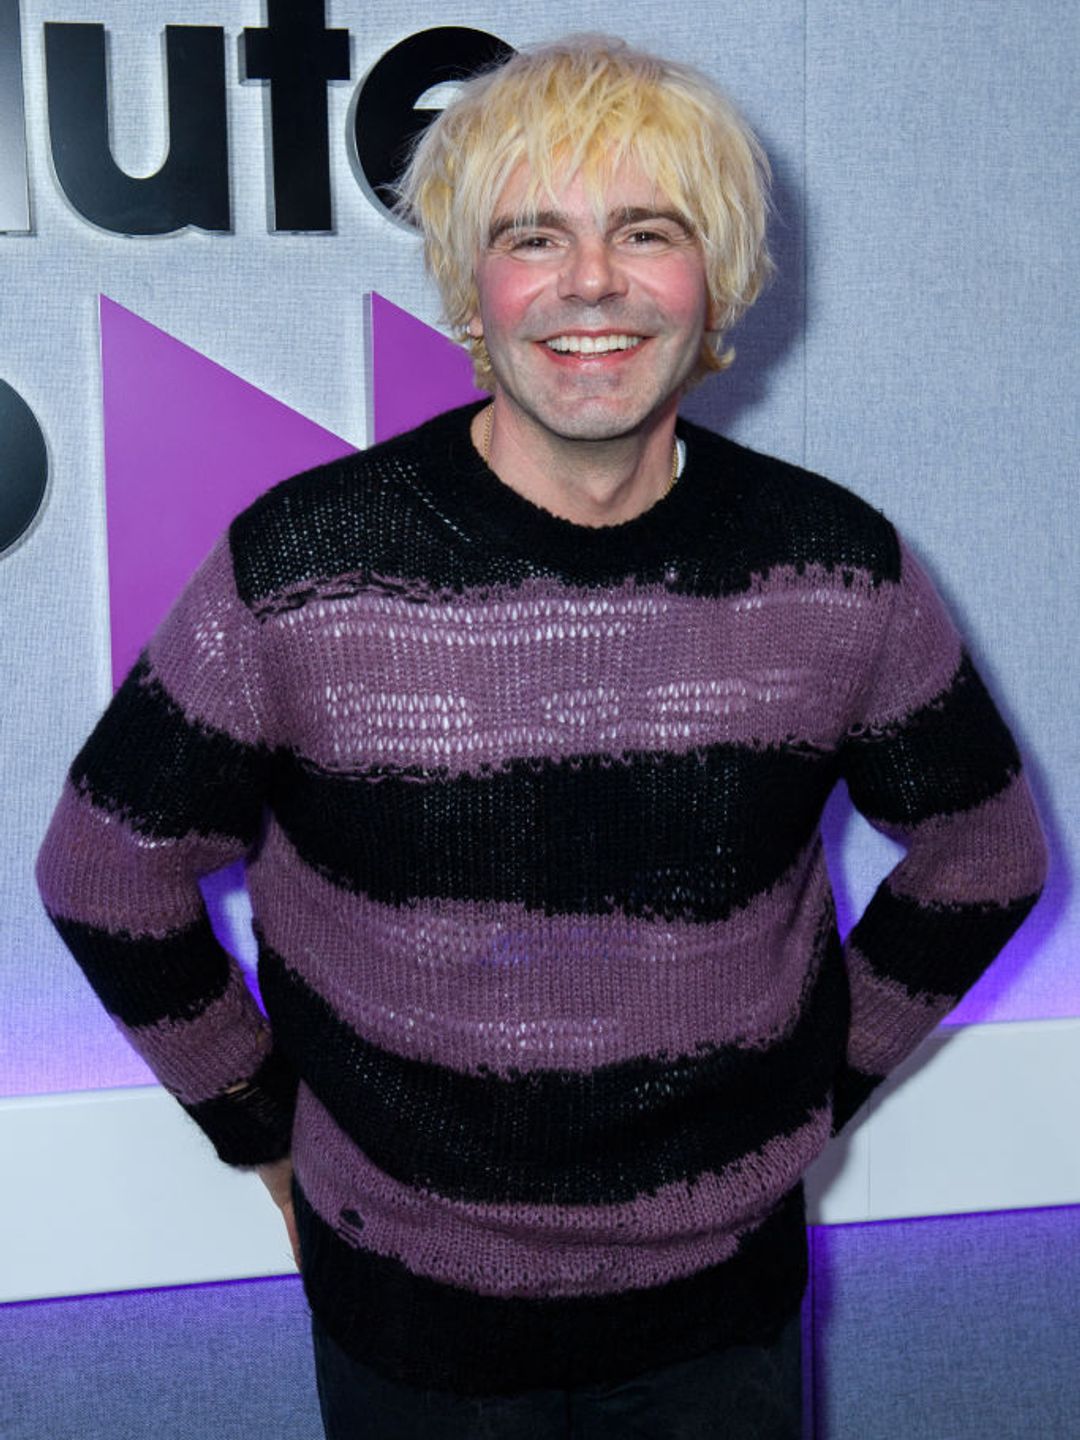 Tim Burgess smiling in a purple and black striped jumper.